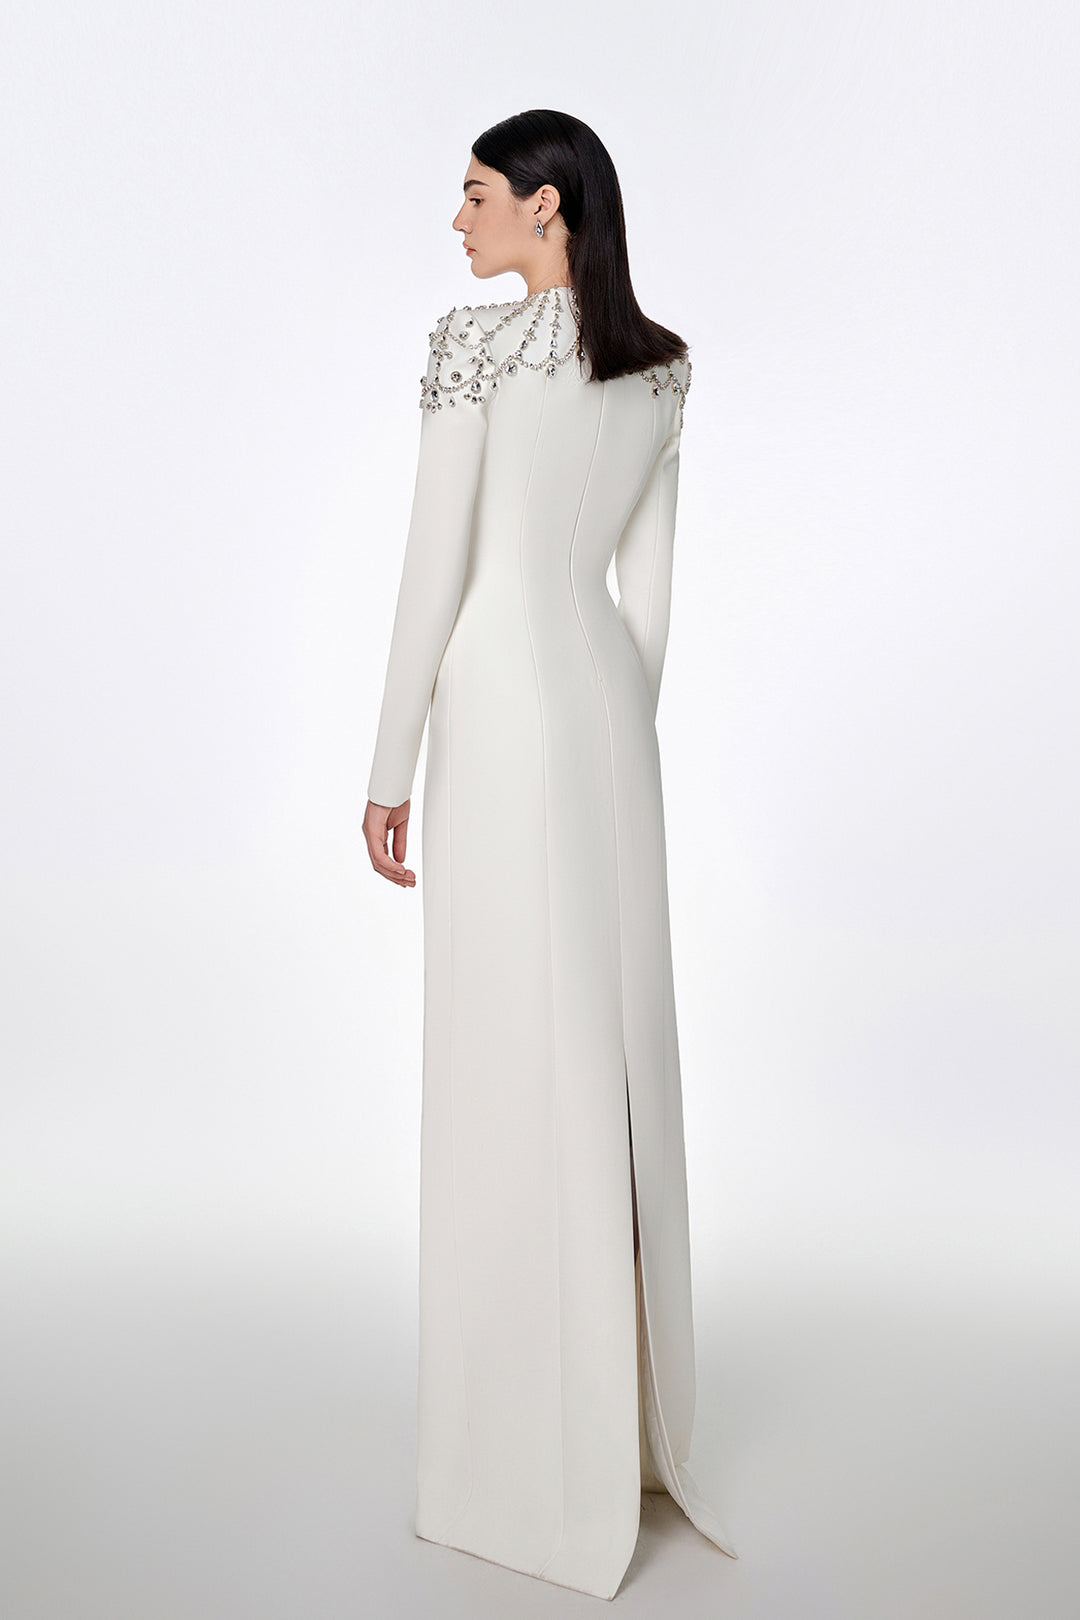 Long-Sleeved Queen Anne Neckline Dress